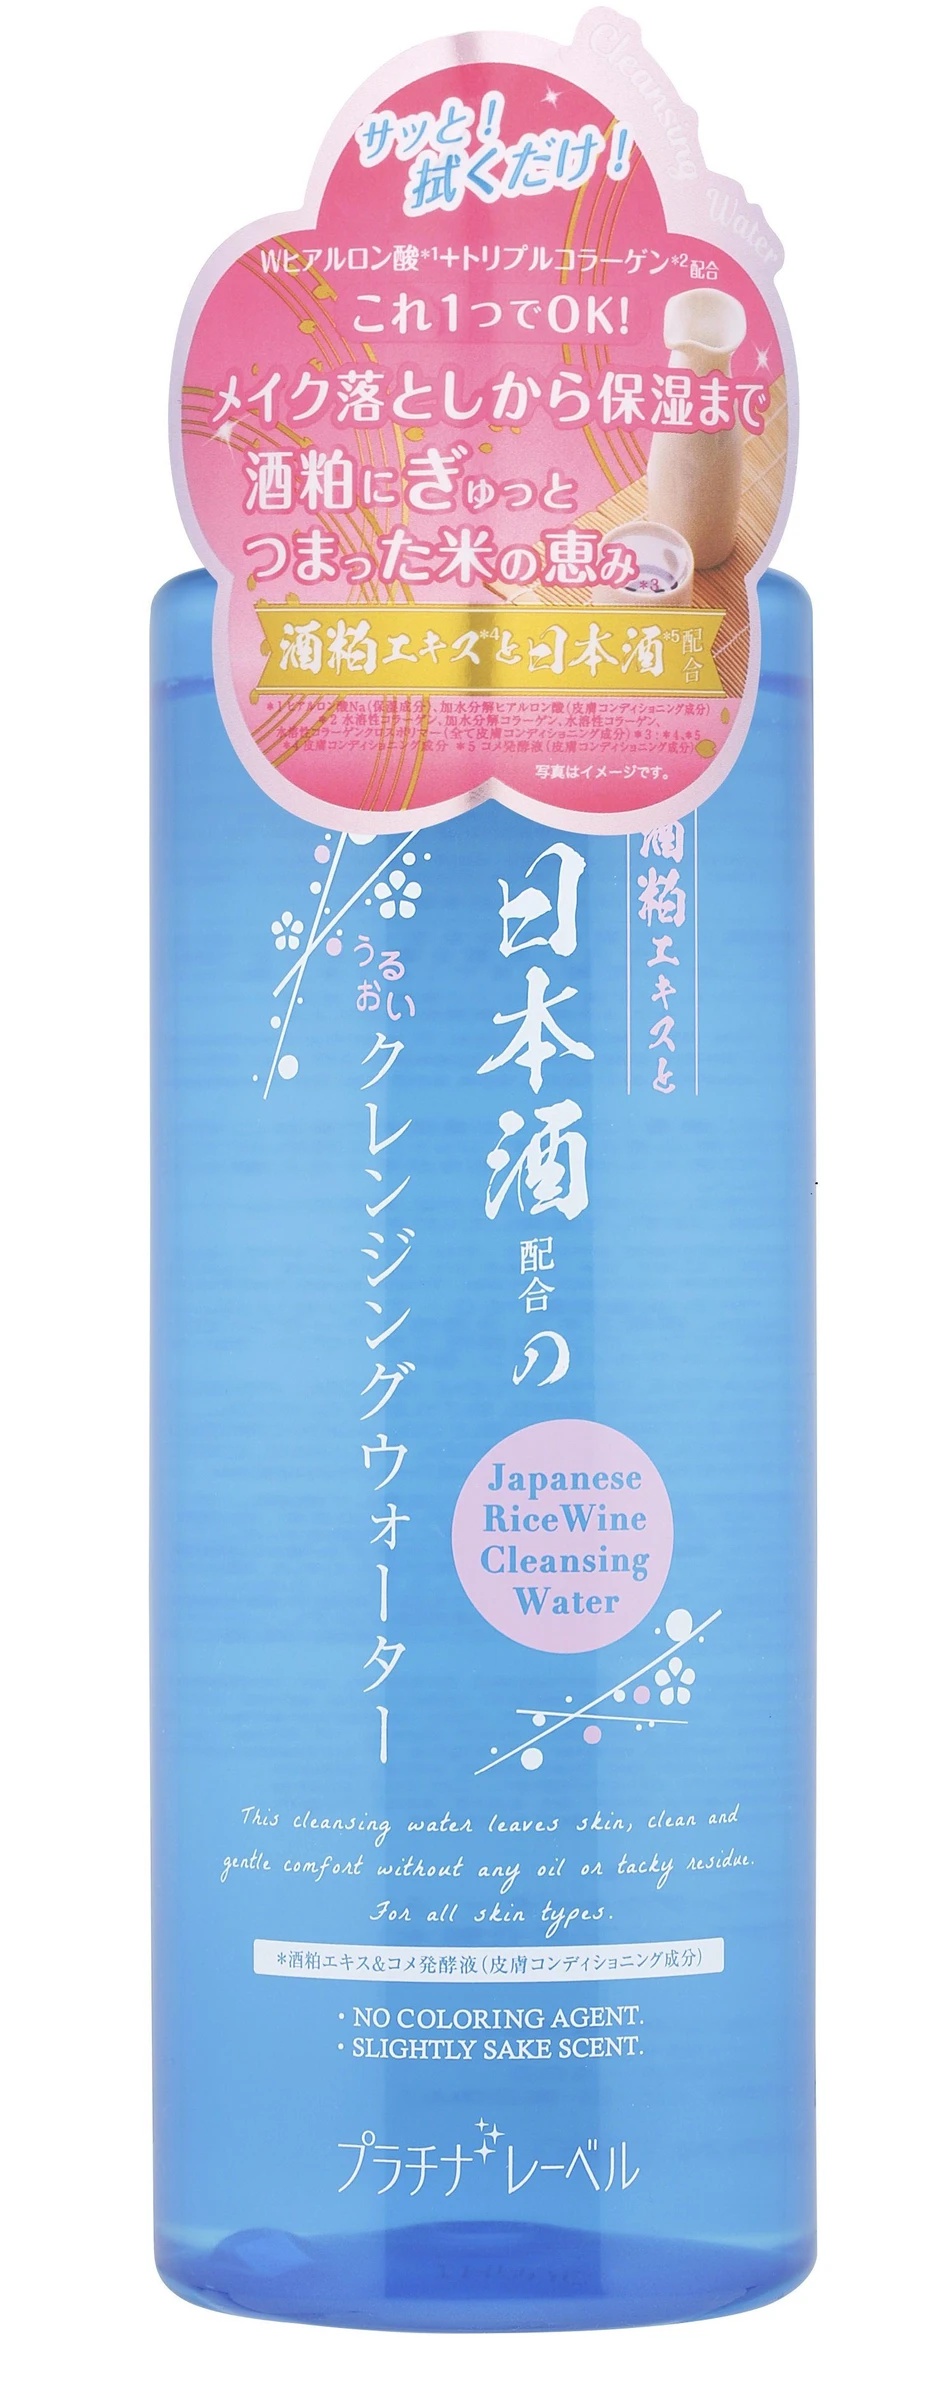 Platinum Label Japanese Rice Wine Cleansing Water